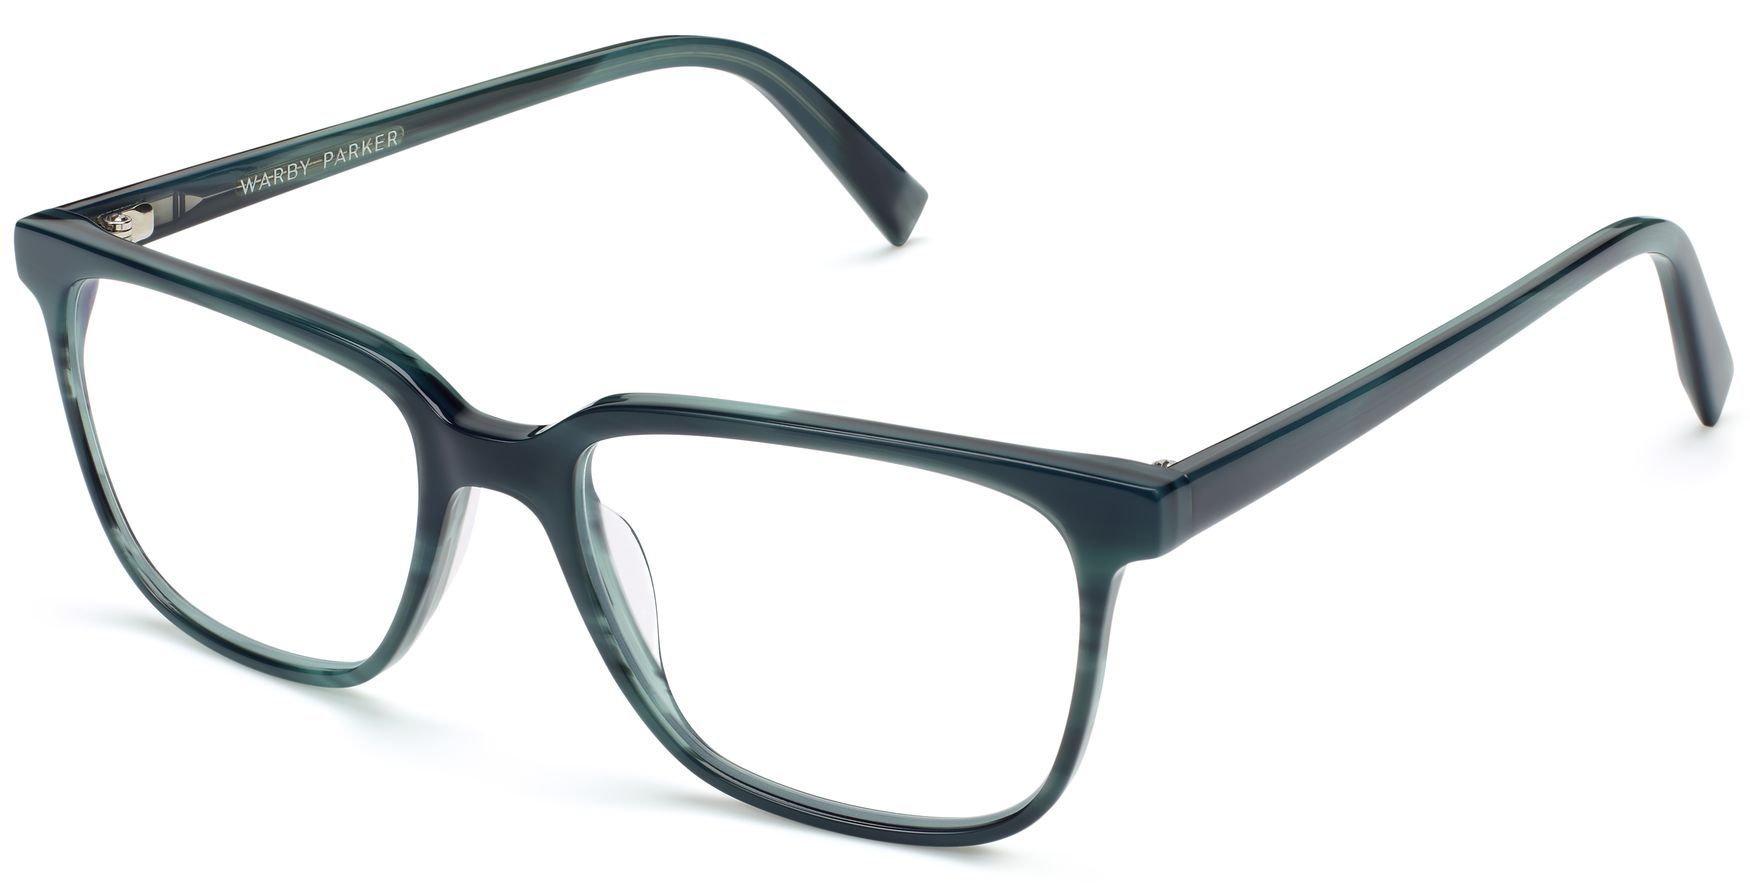 kacamata oversize model kacamata minus yang lagi trend